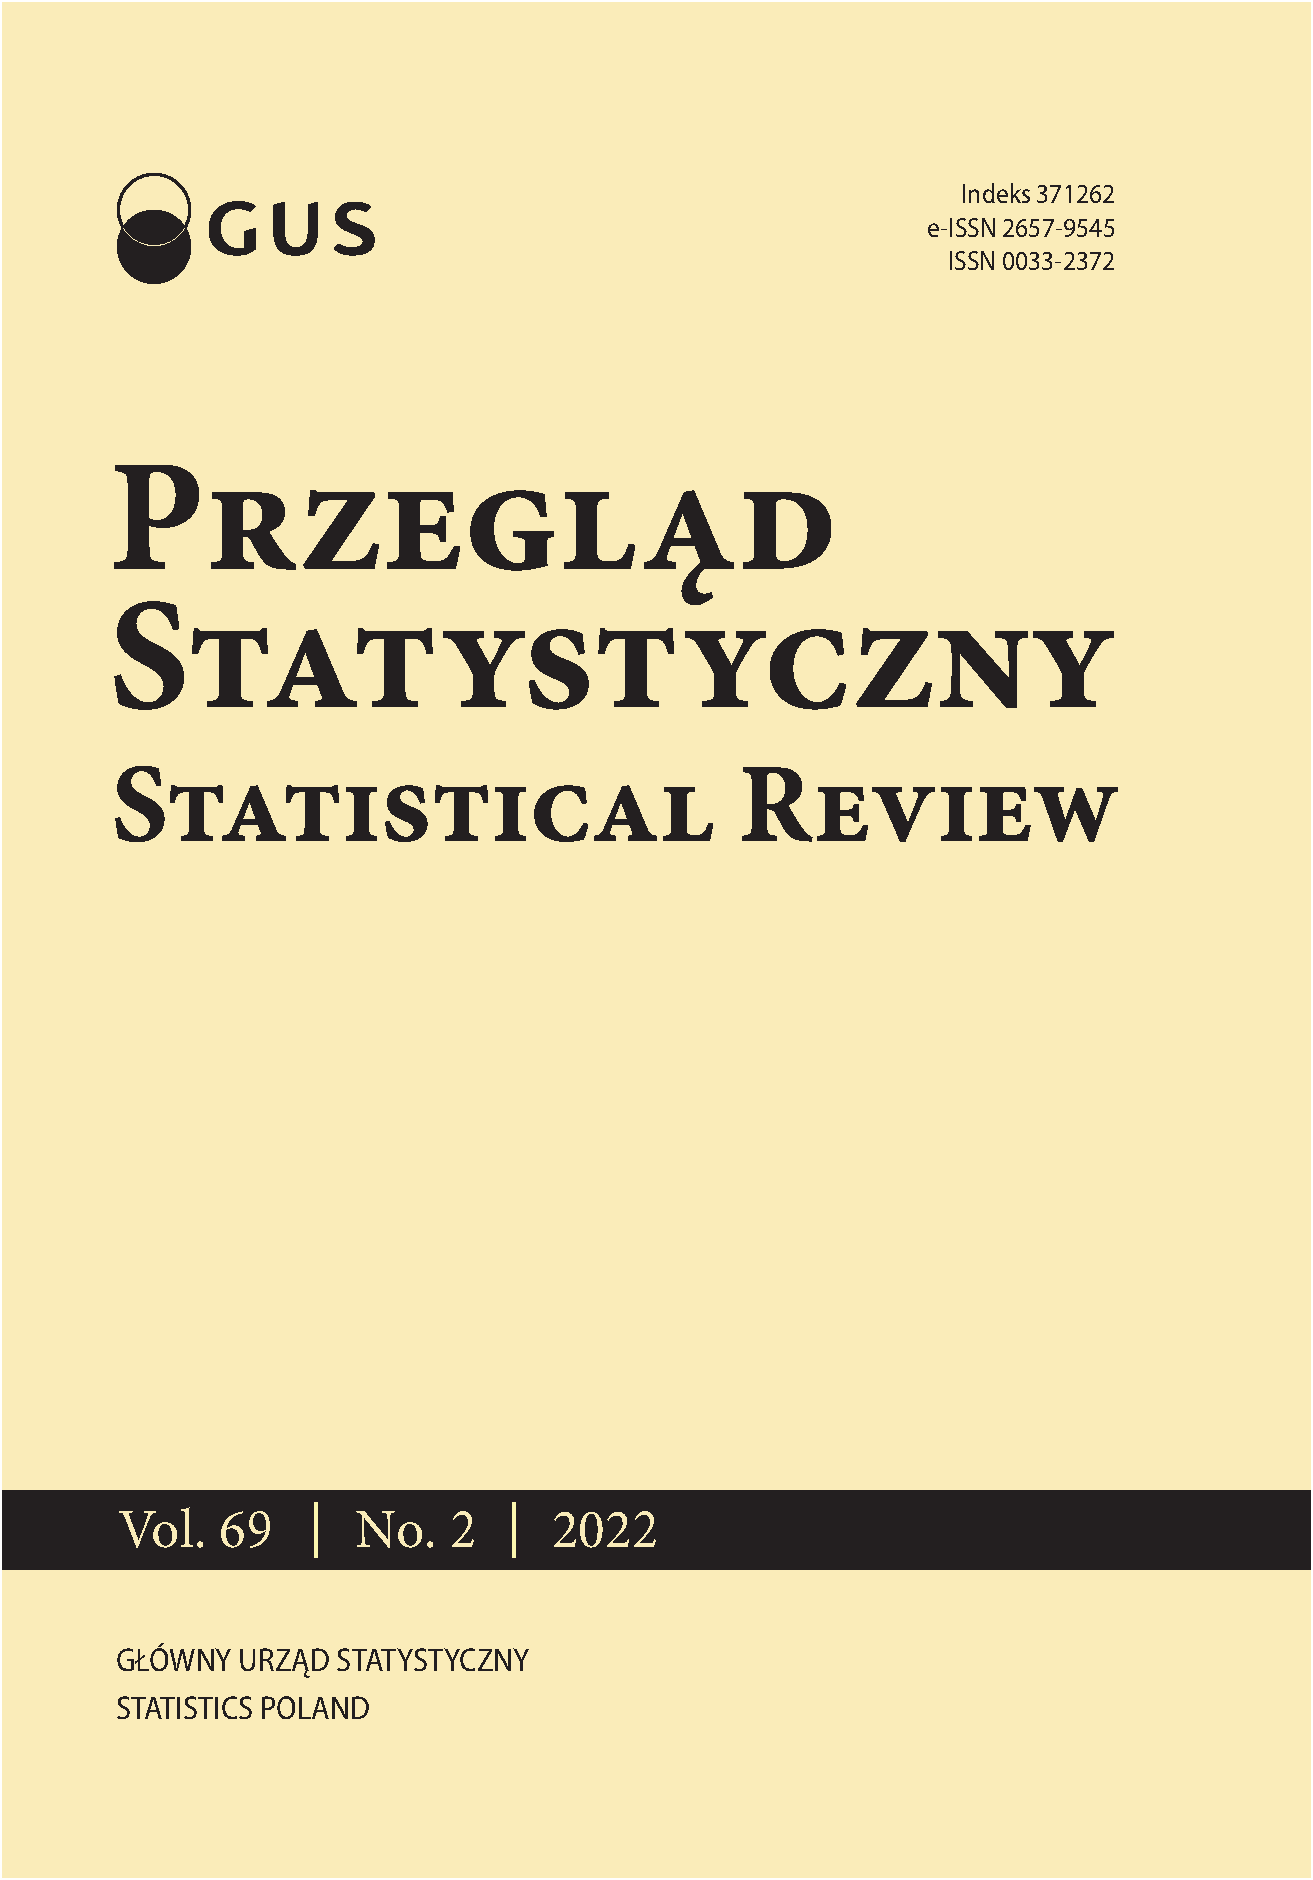 In memory of Professor Stanisława Bartosiewicz Cover Image